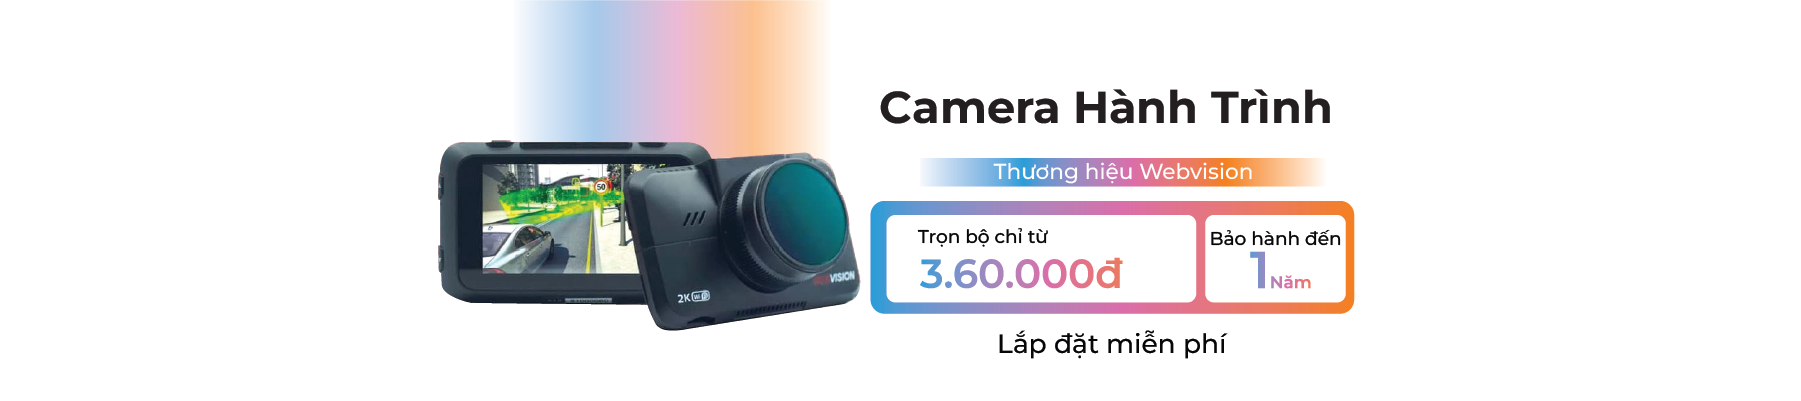 camera-hành-trinh-webvision